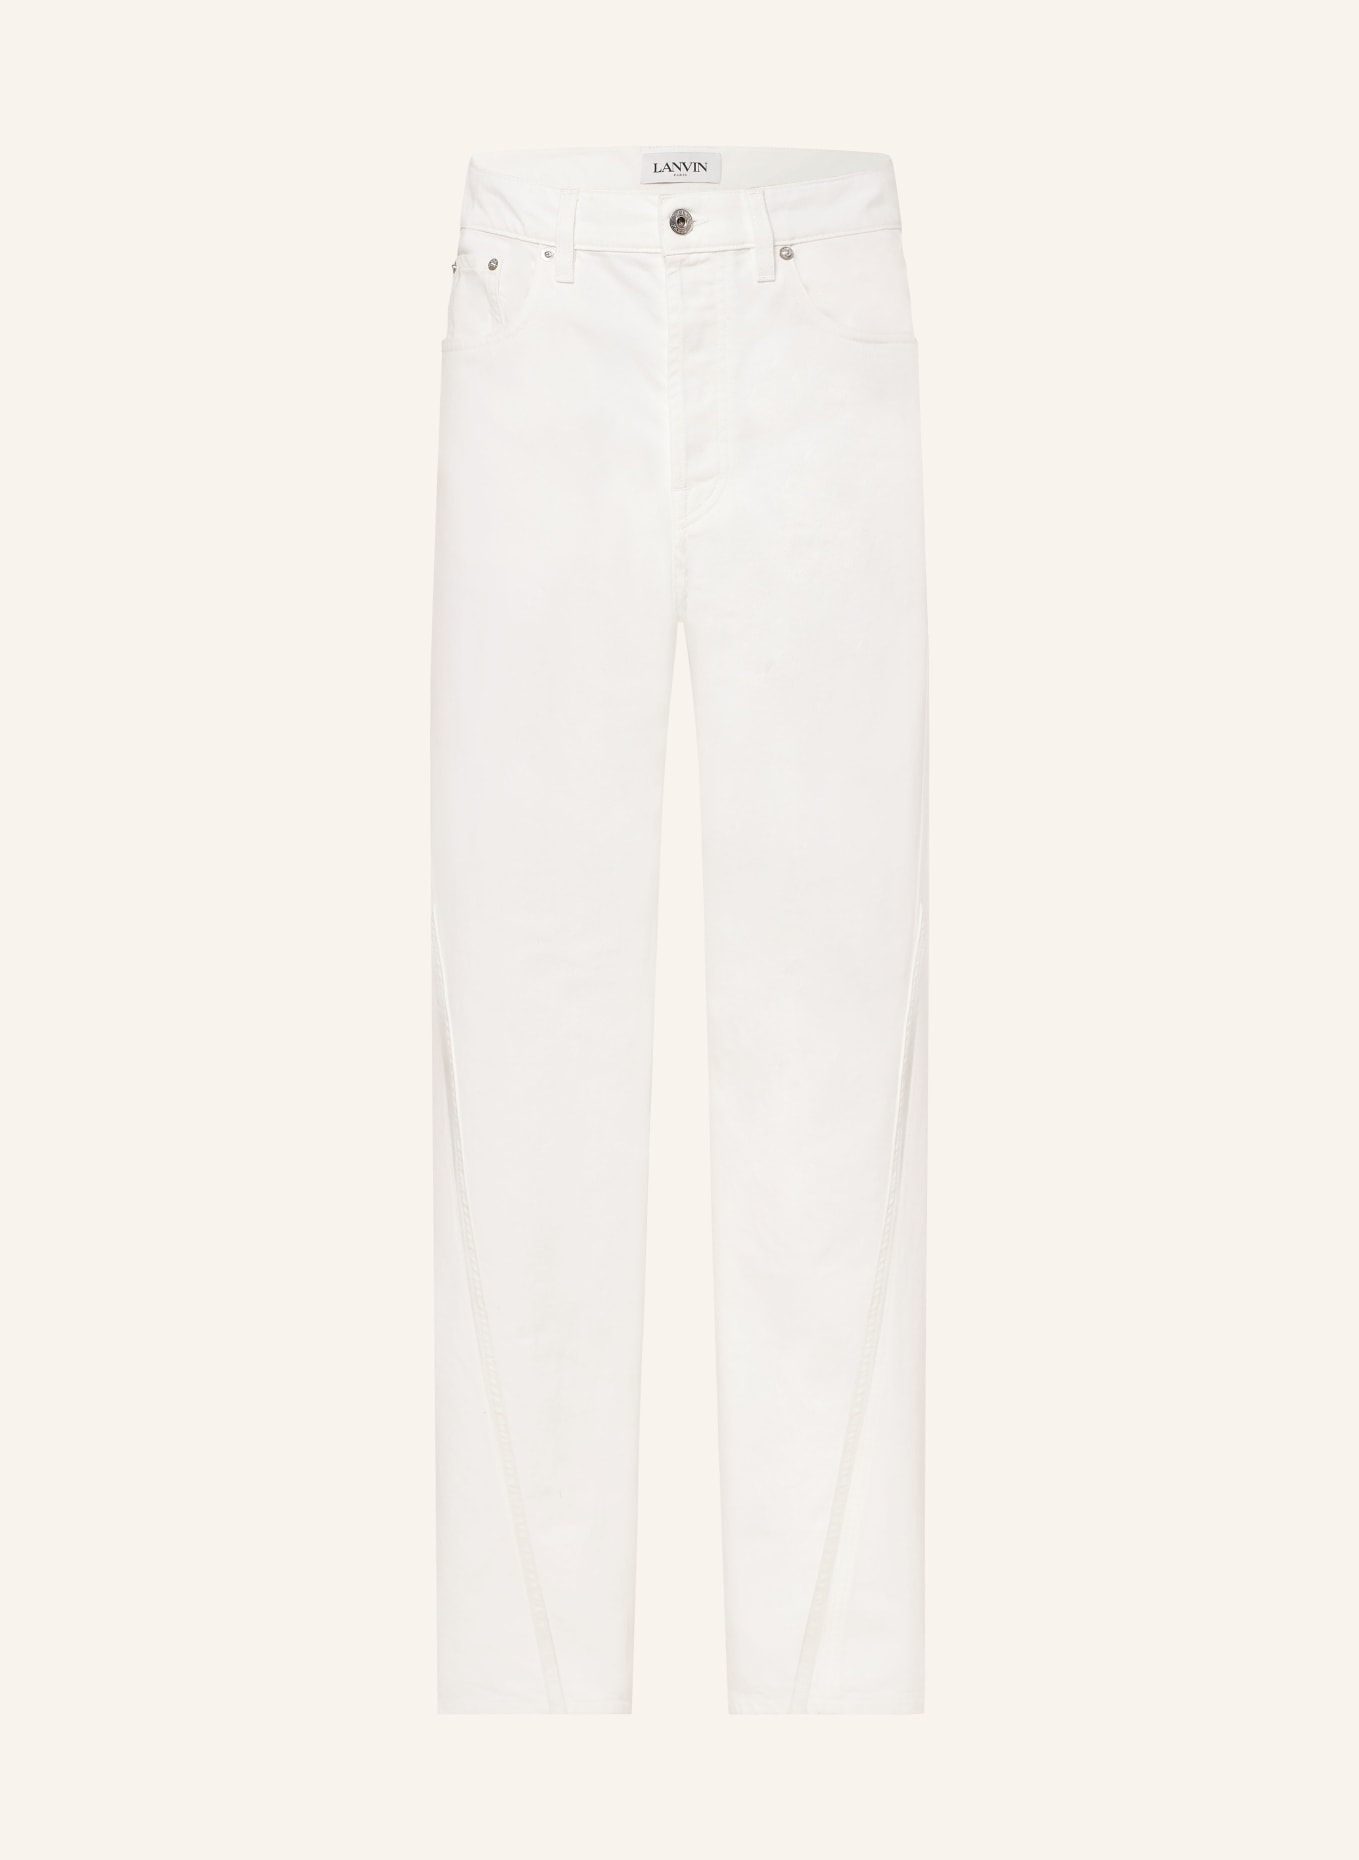 LANVIN Jeans Straight Fit, Farbe: 01 optic white (Bild 1)